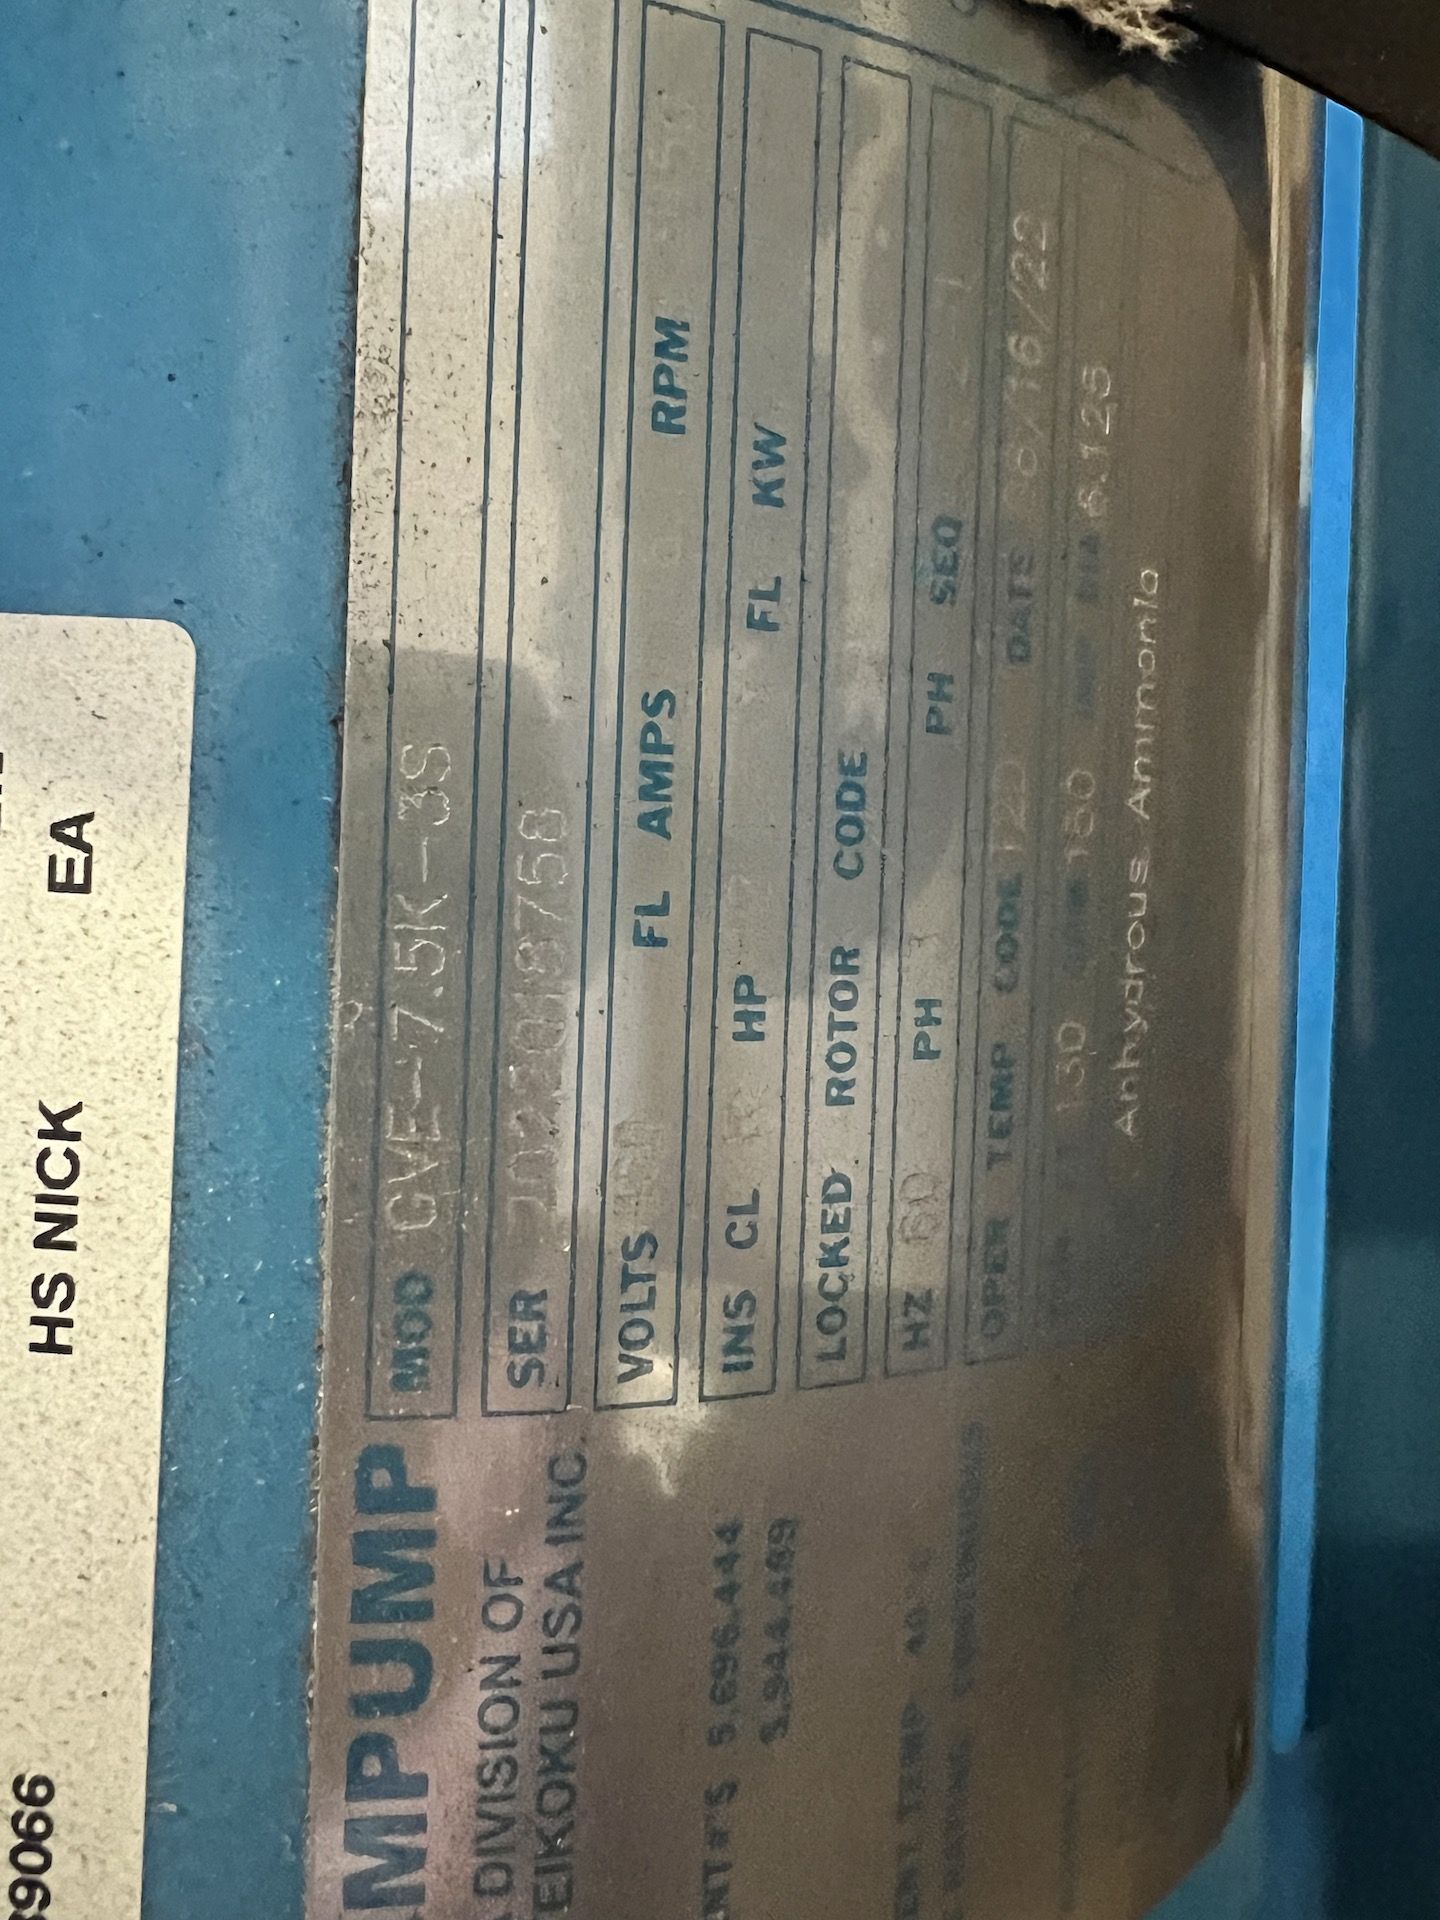 NEW CHEMPUMP G-SERIES AMMONIA PUMP, MODEL GVE-7.5K-3S, 12.2 HP, 460 V (SIMPLE LOADING FEE $110) - Image 5 of 12